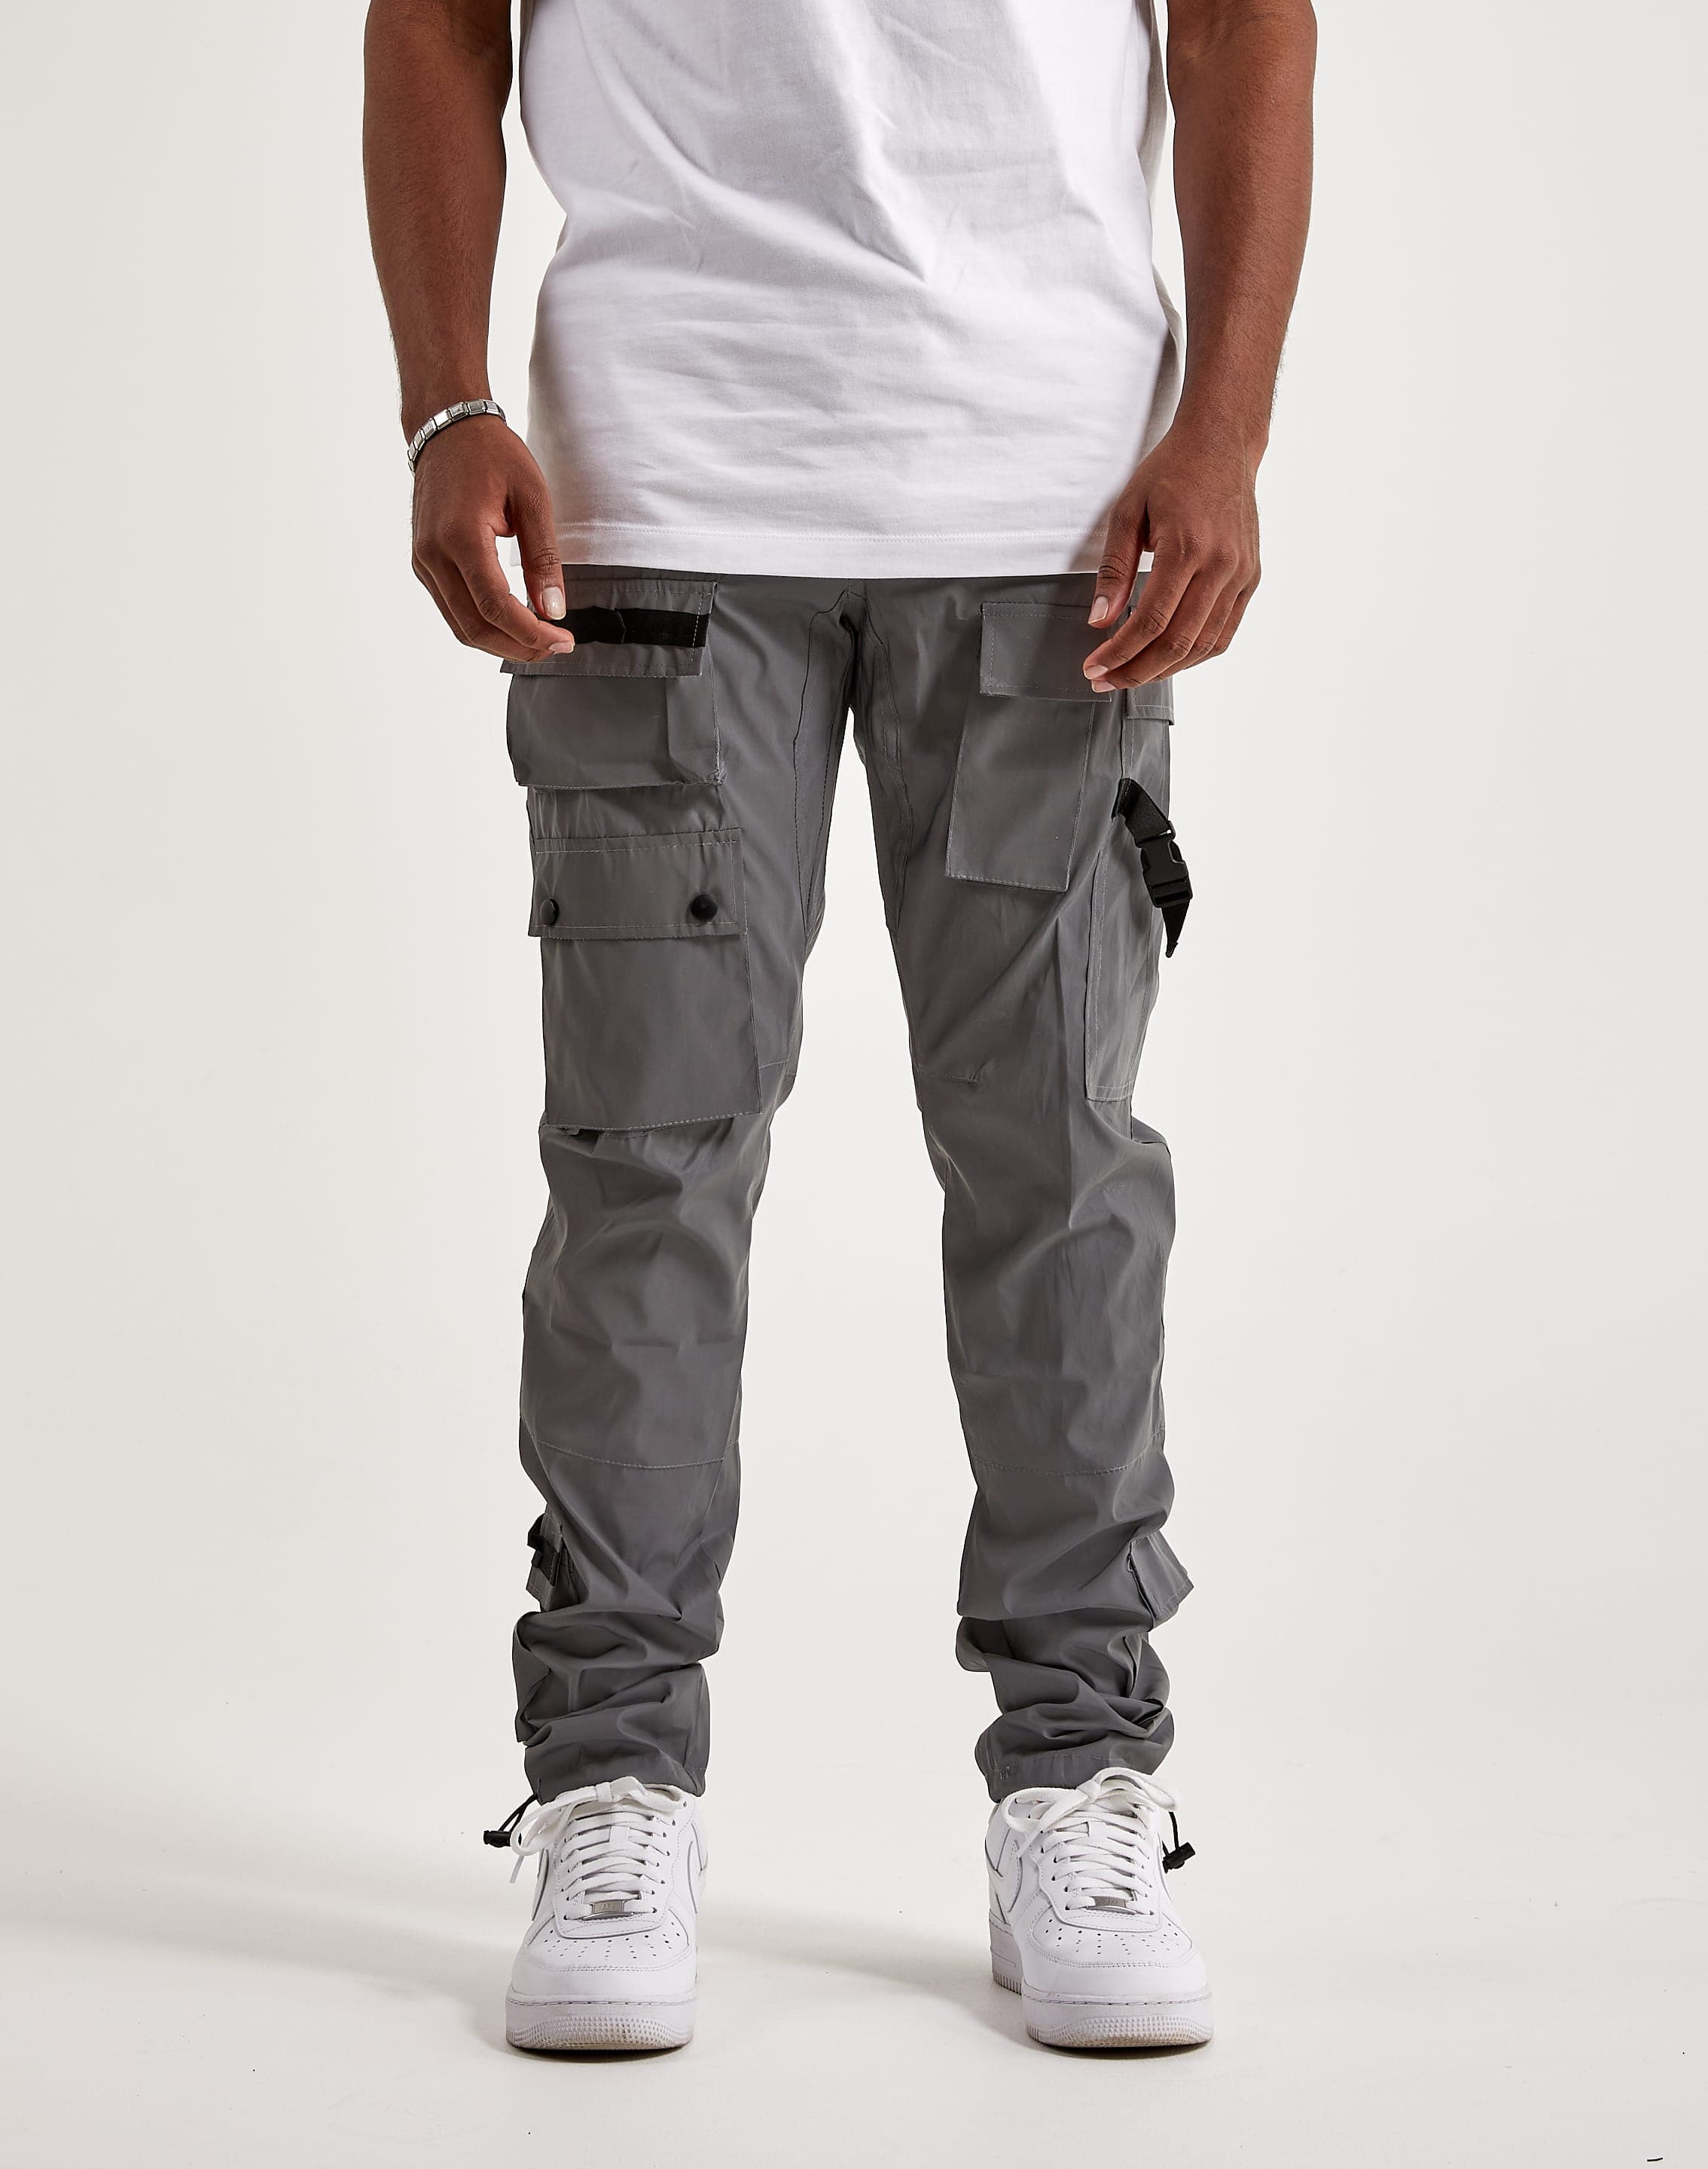 Staple Nylon Cargo Pants Black  Match Black Jordans – 8&9 Clothing Co.